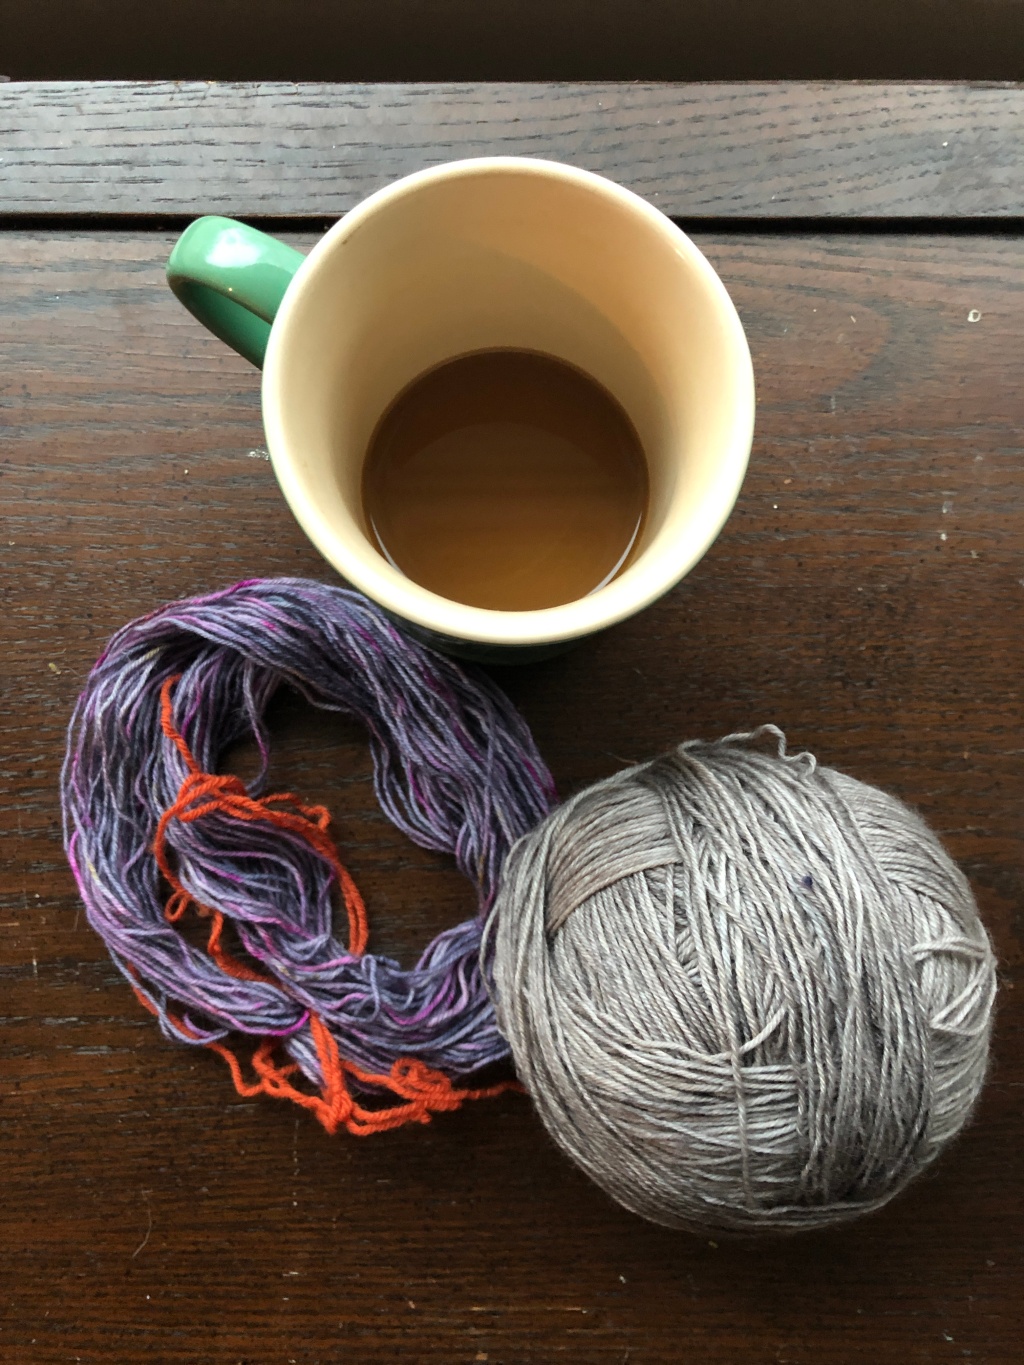 Purple and gray yarns from Less Traveled Yarns and a coffee mug